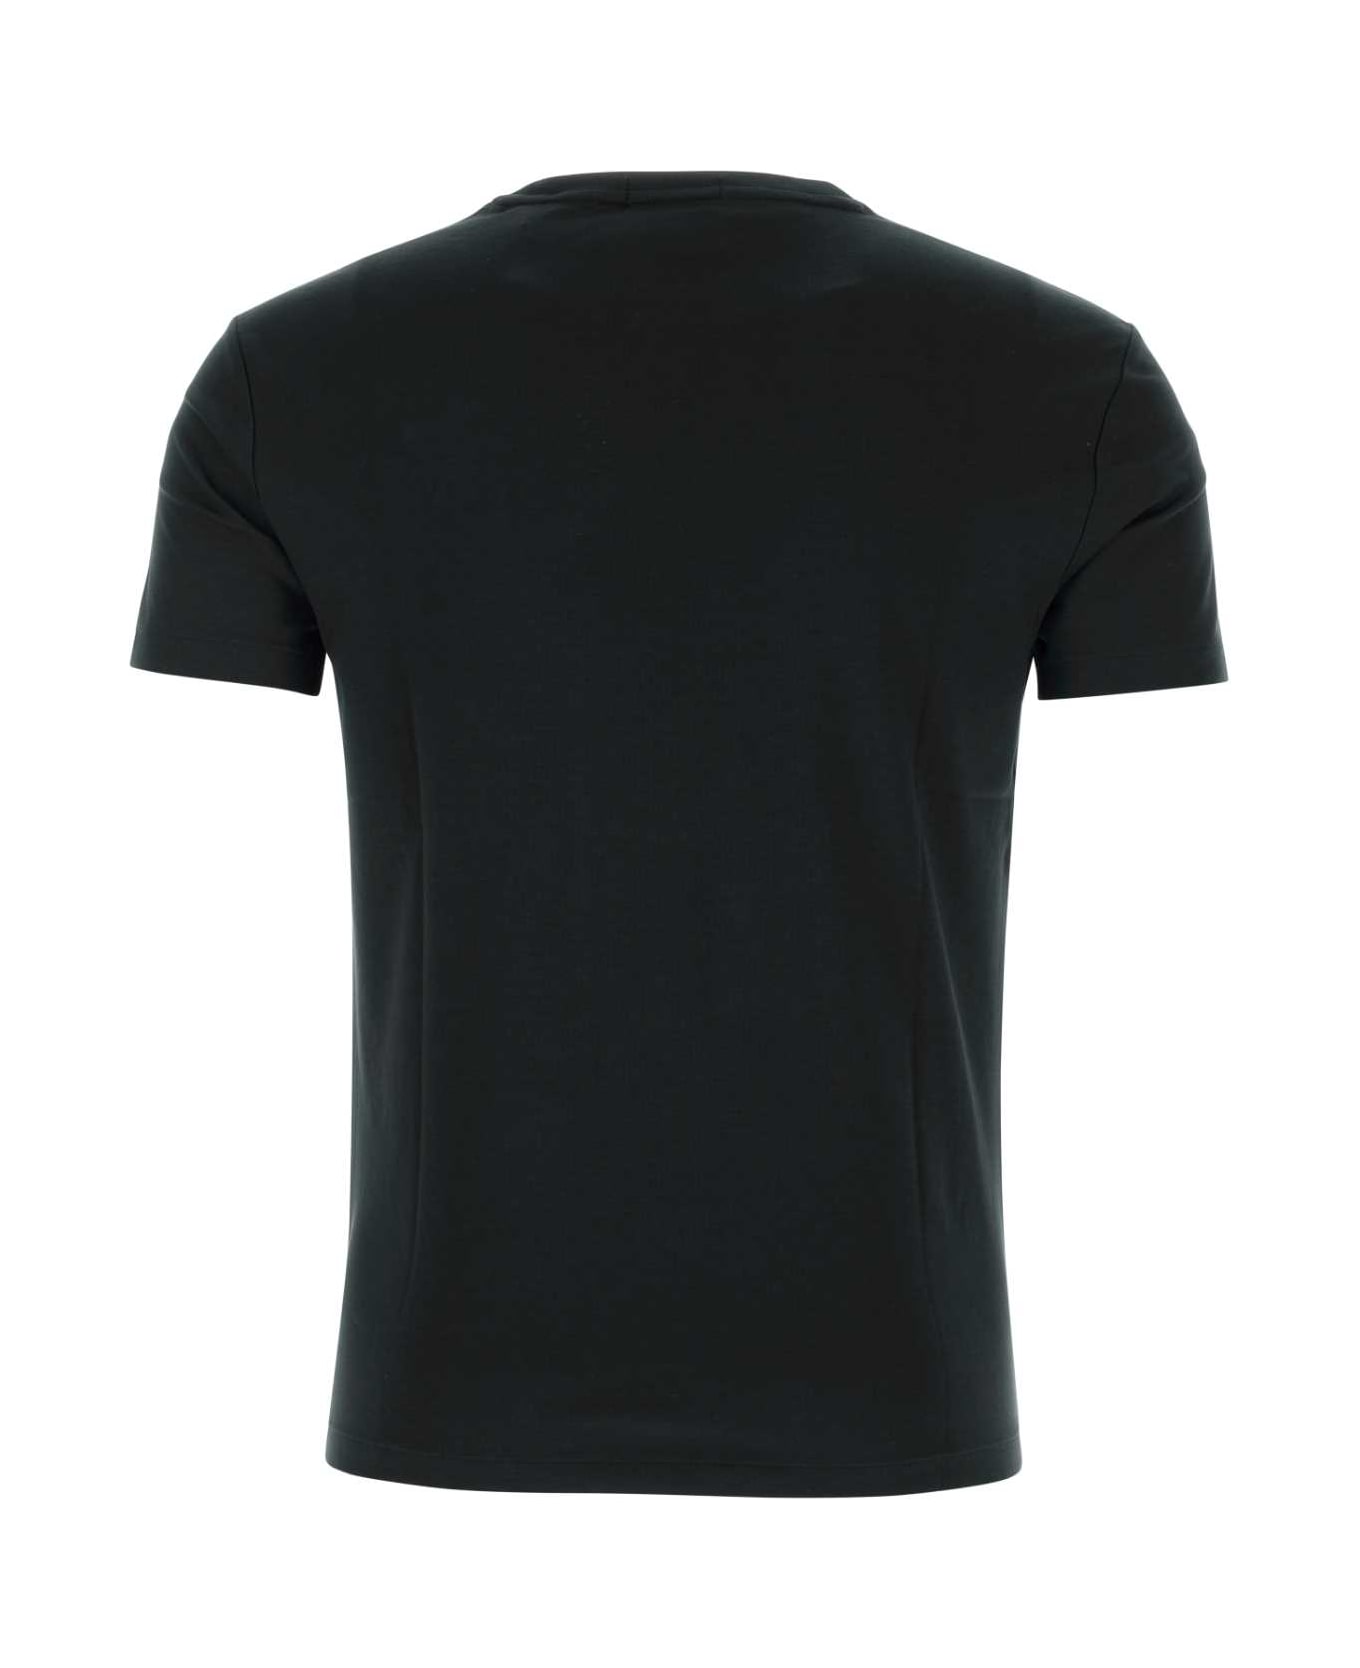 Polo Ralph Lauren Black Cotton T-shirt - 001